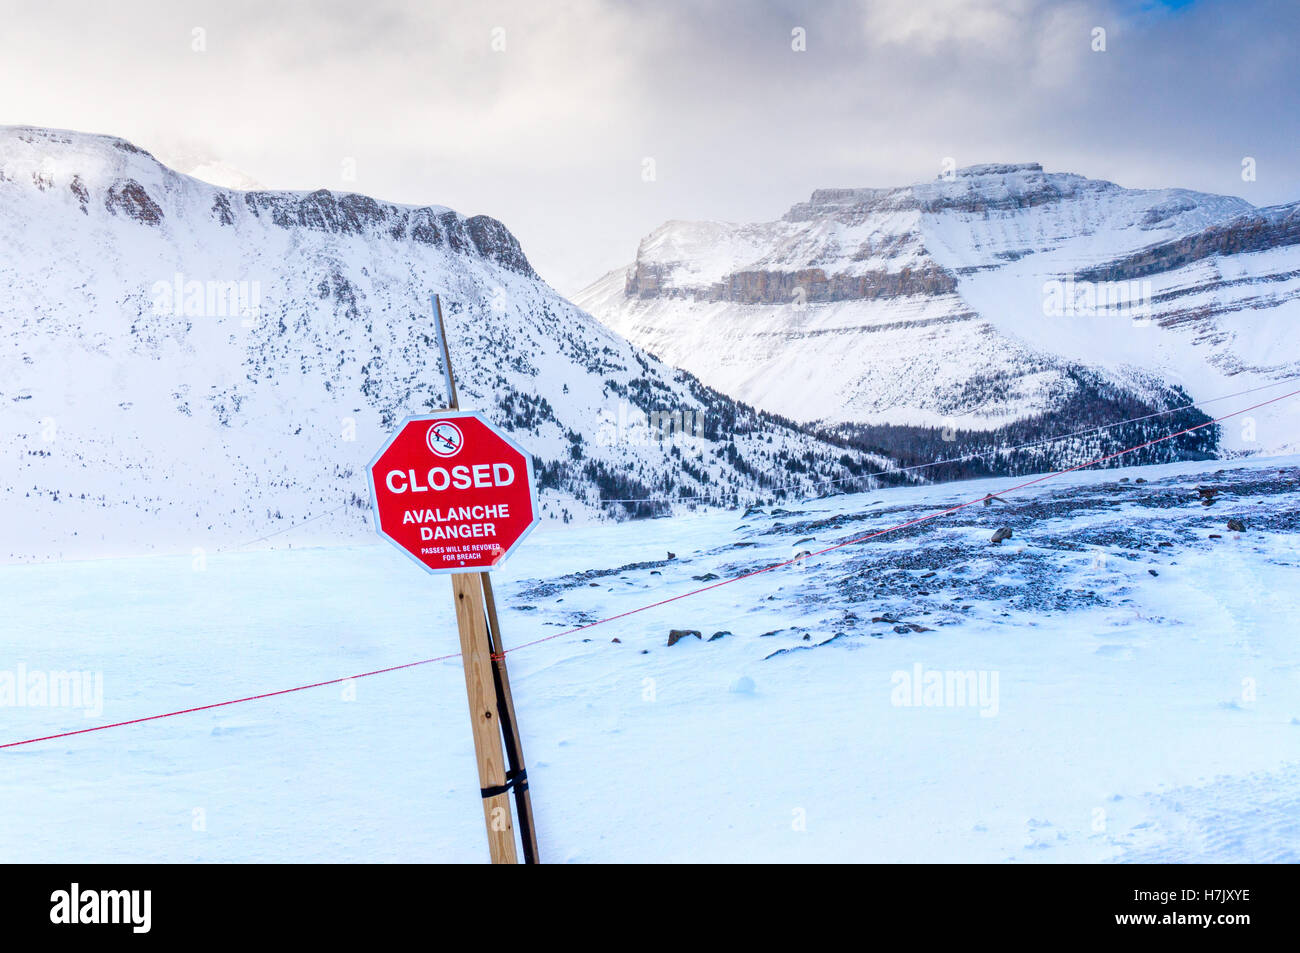 An avalanche danger sign at Lake Louise Ski Resort. Stock Photo